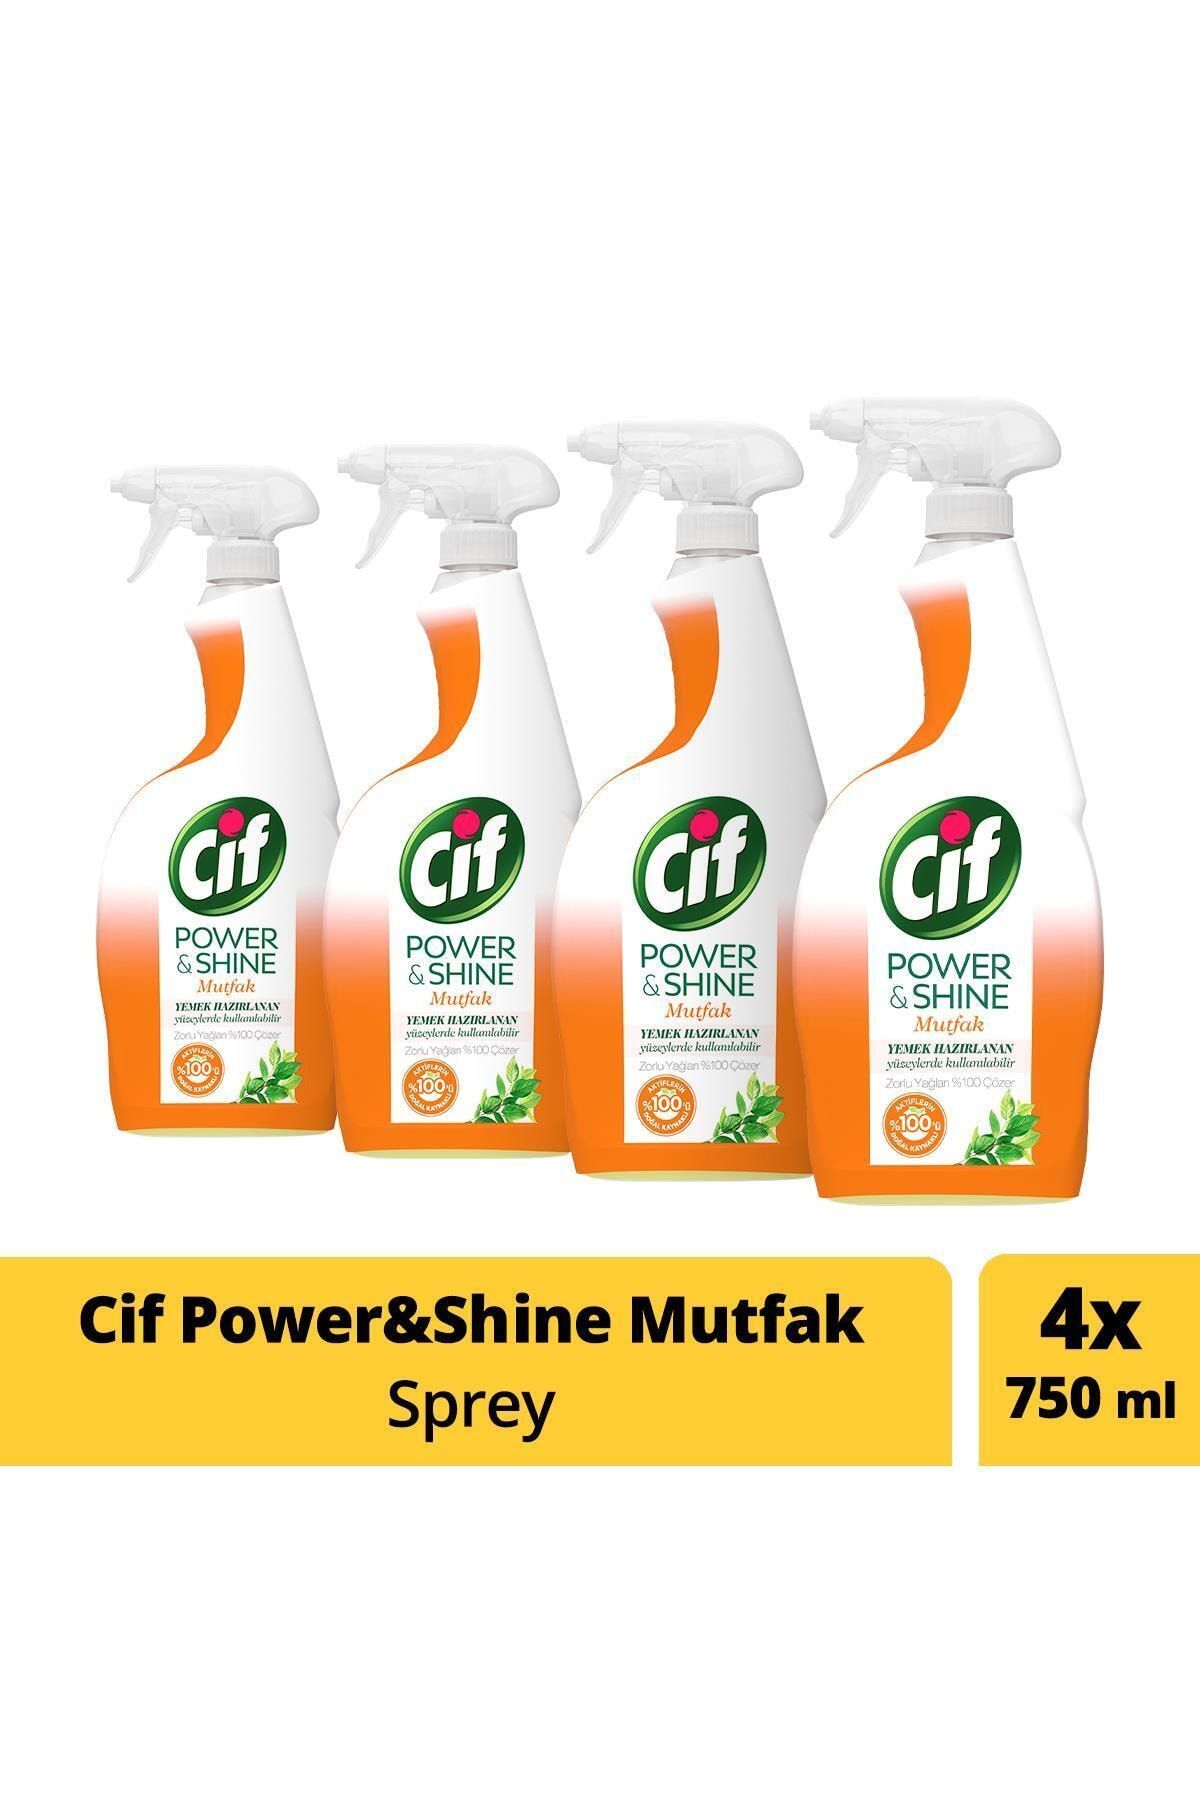 Cif Power & Shine Mutfak Sprey 750 ml - 4'lü Paket